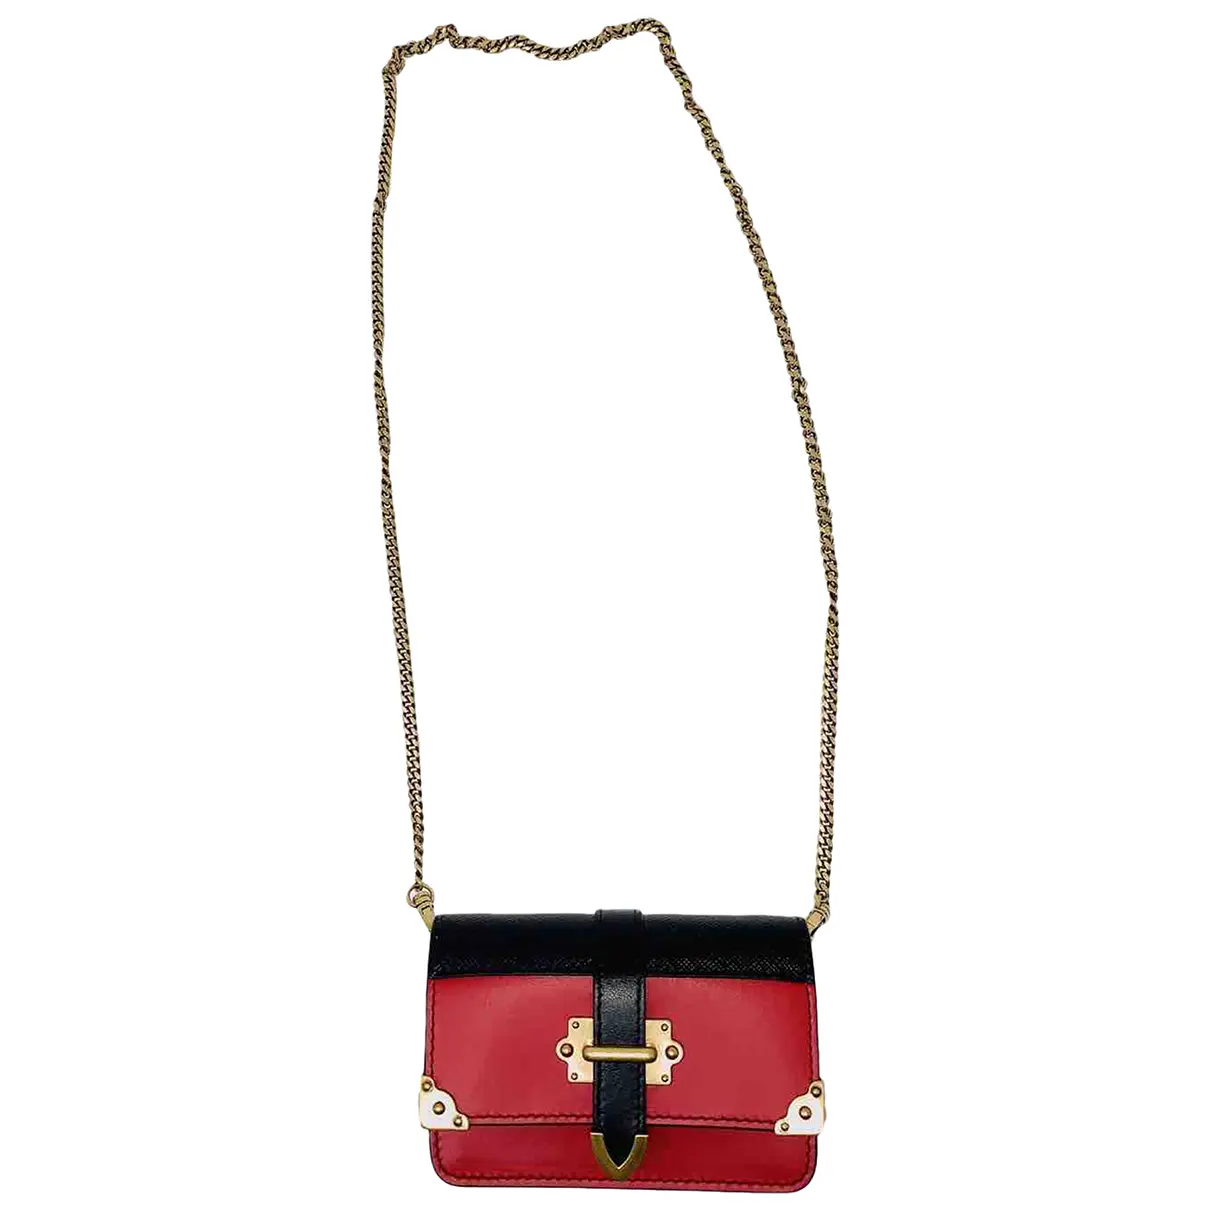 Cahier Chain leather handbag Prada